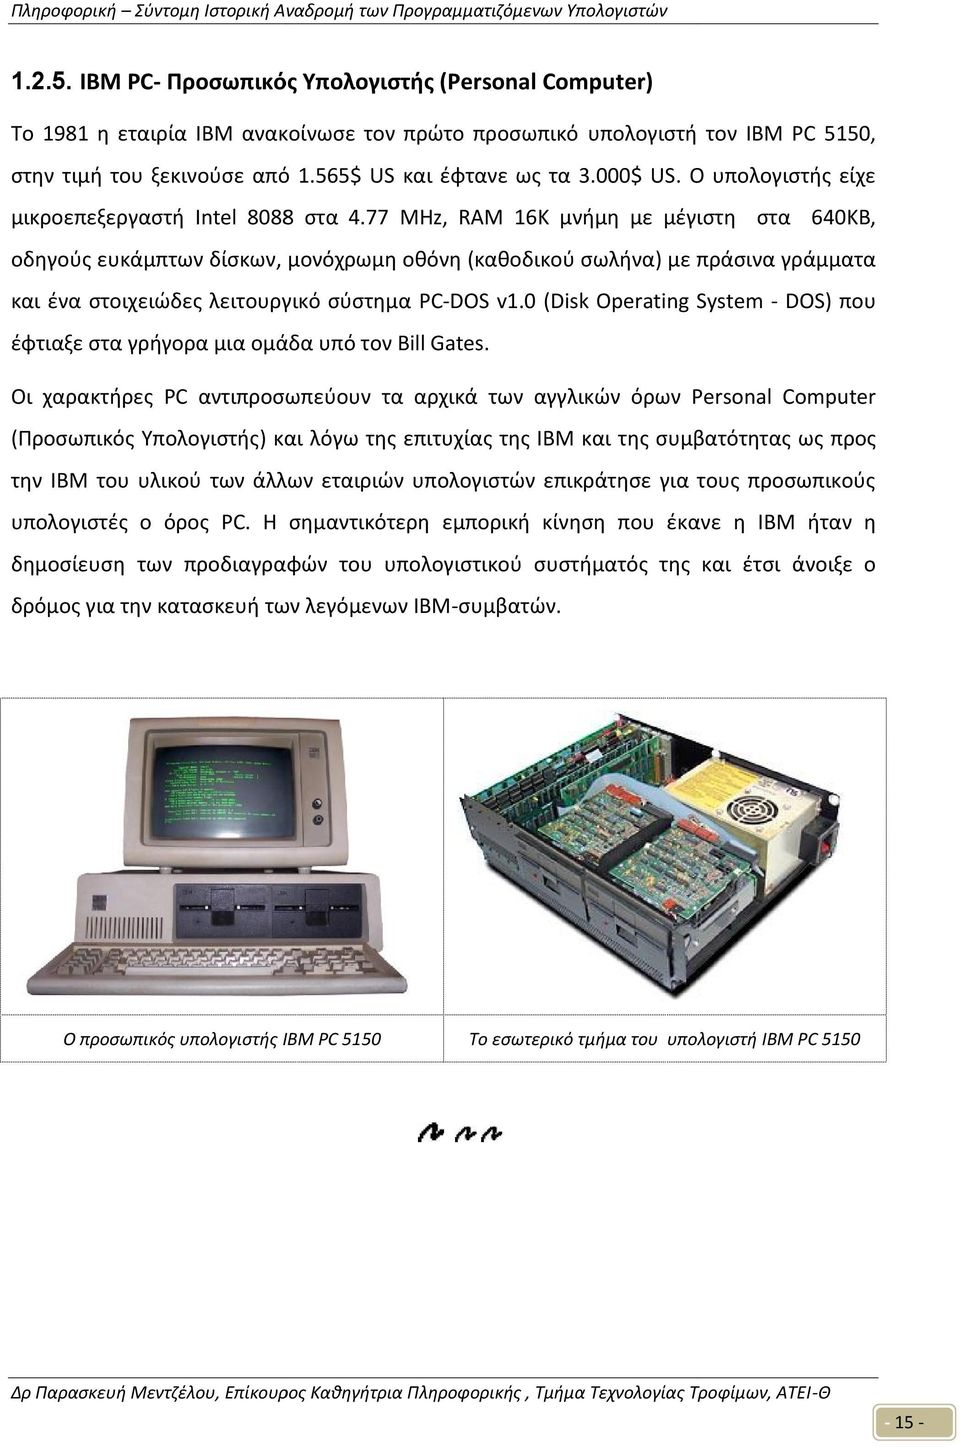 77 MHz, RAM 16Κ μνήμη με μέγιστη στα 640ΚΒ, οδηγούς ευκάμπτων δίσκων, μονόχρωμη οθόνη (καθοδικού σωλήνα) με πράσινα γράμματα και ένα στοιχειώδες λειτουργικό σύστημα PC-DOS v1.